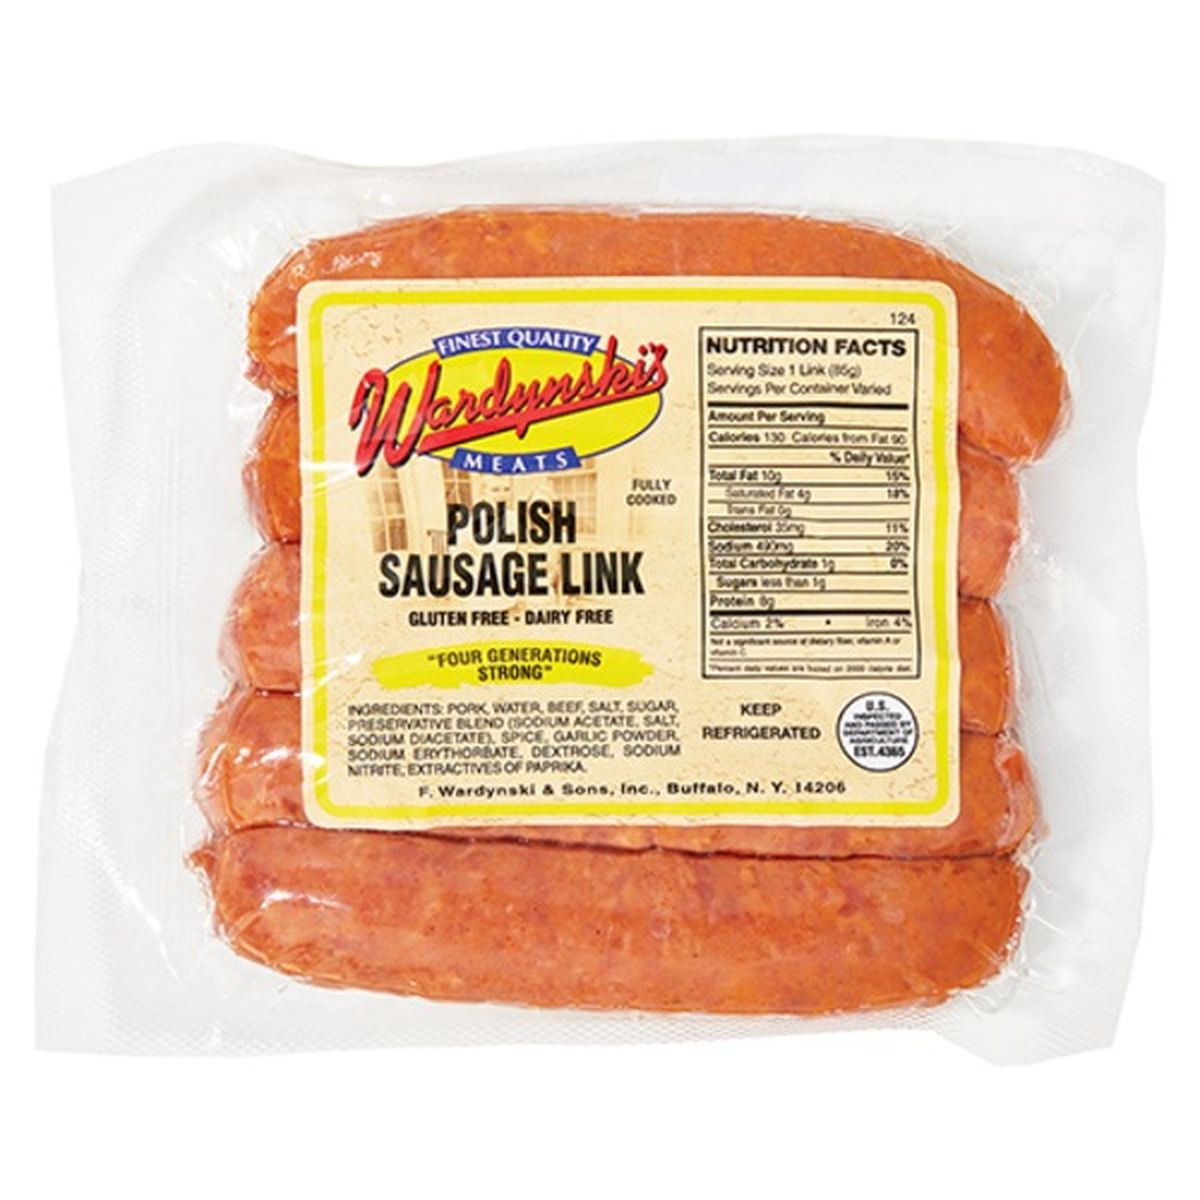 Calories in Wardynski's Polish Sausage Links